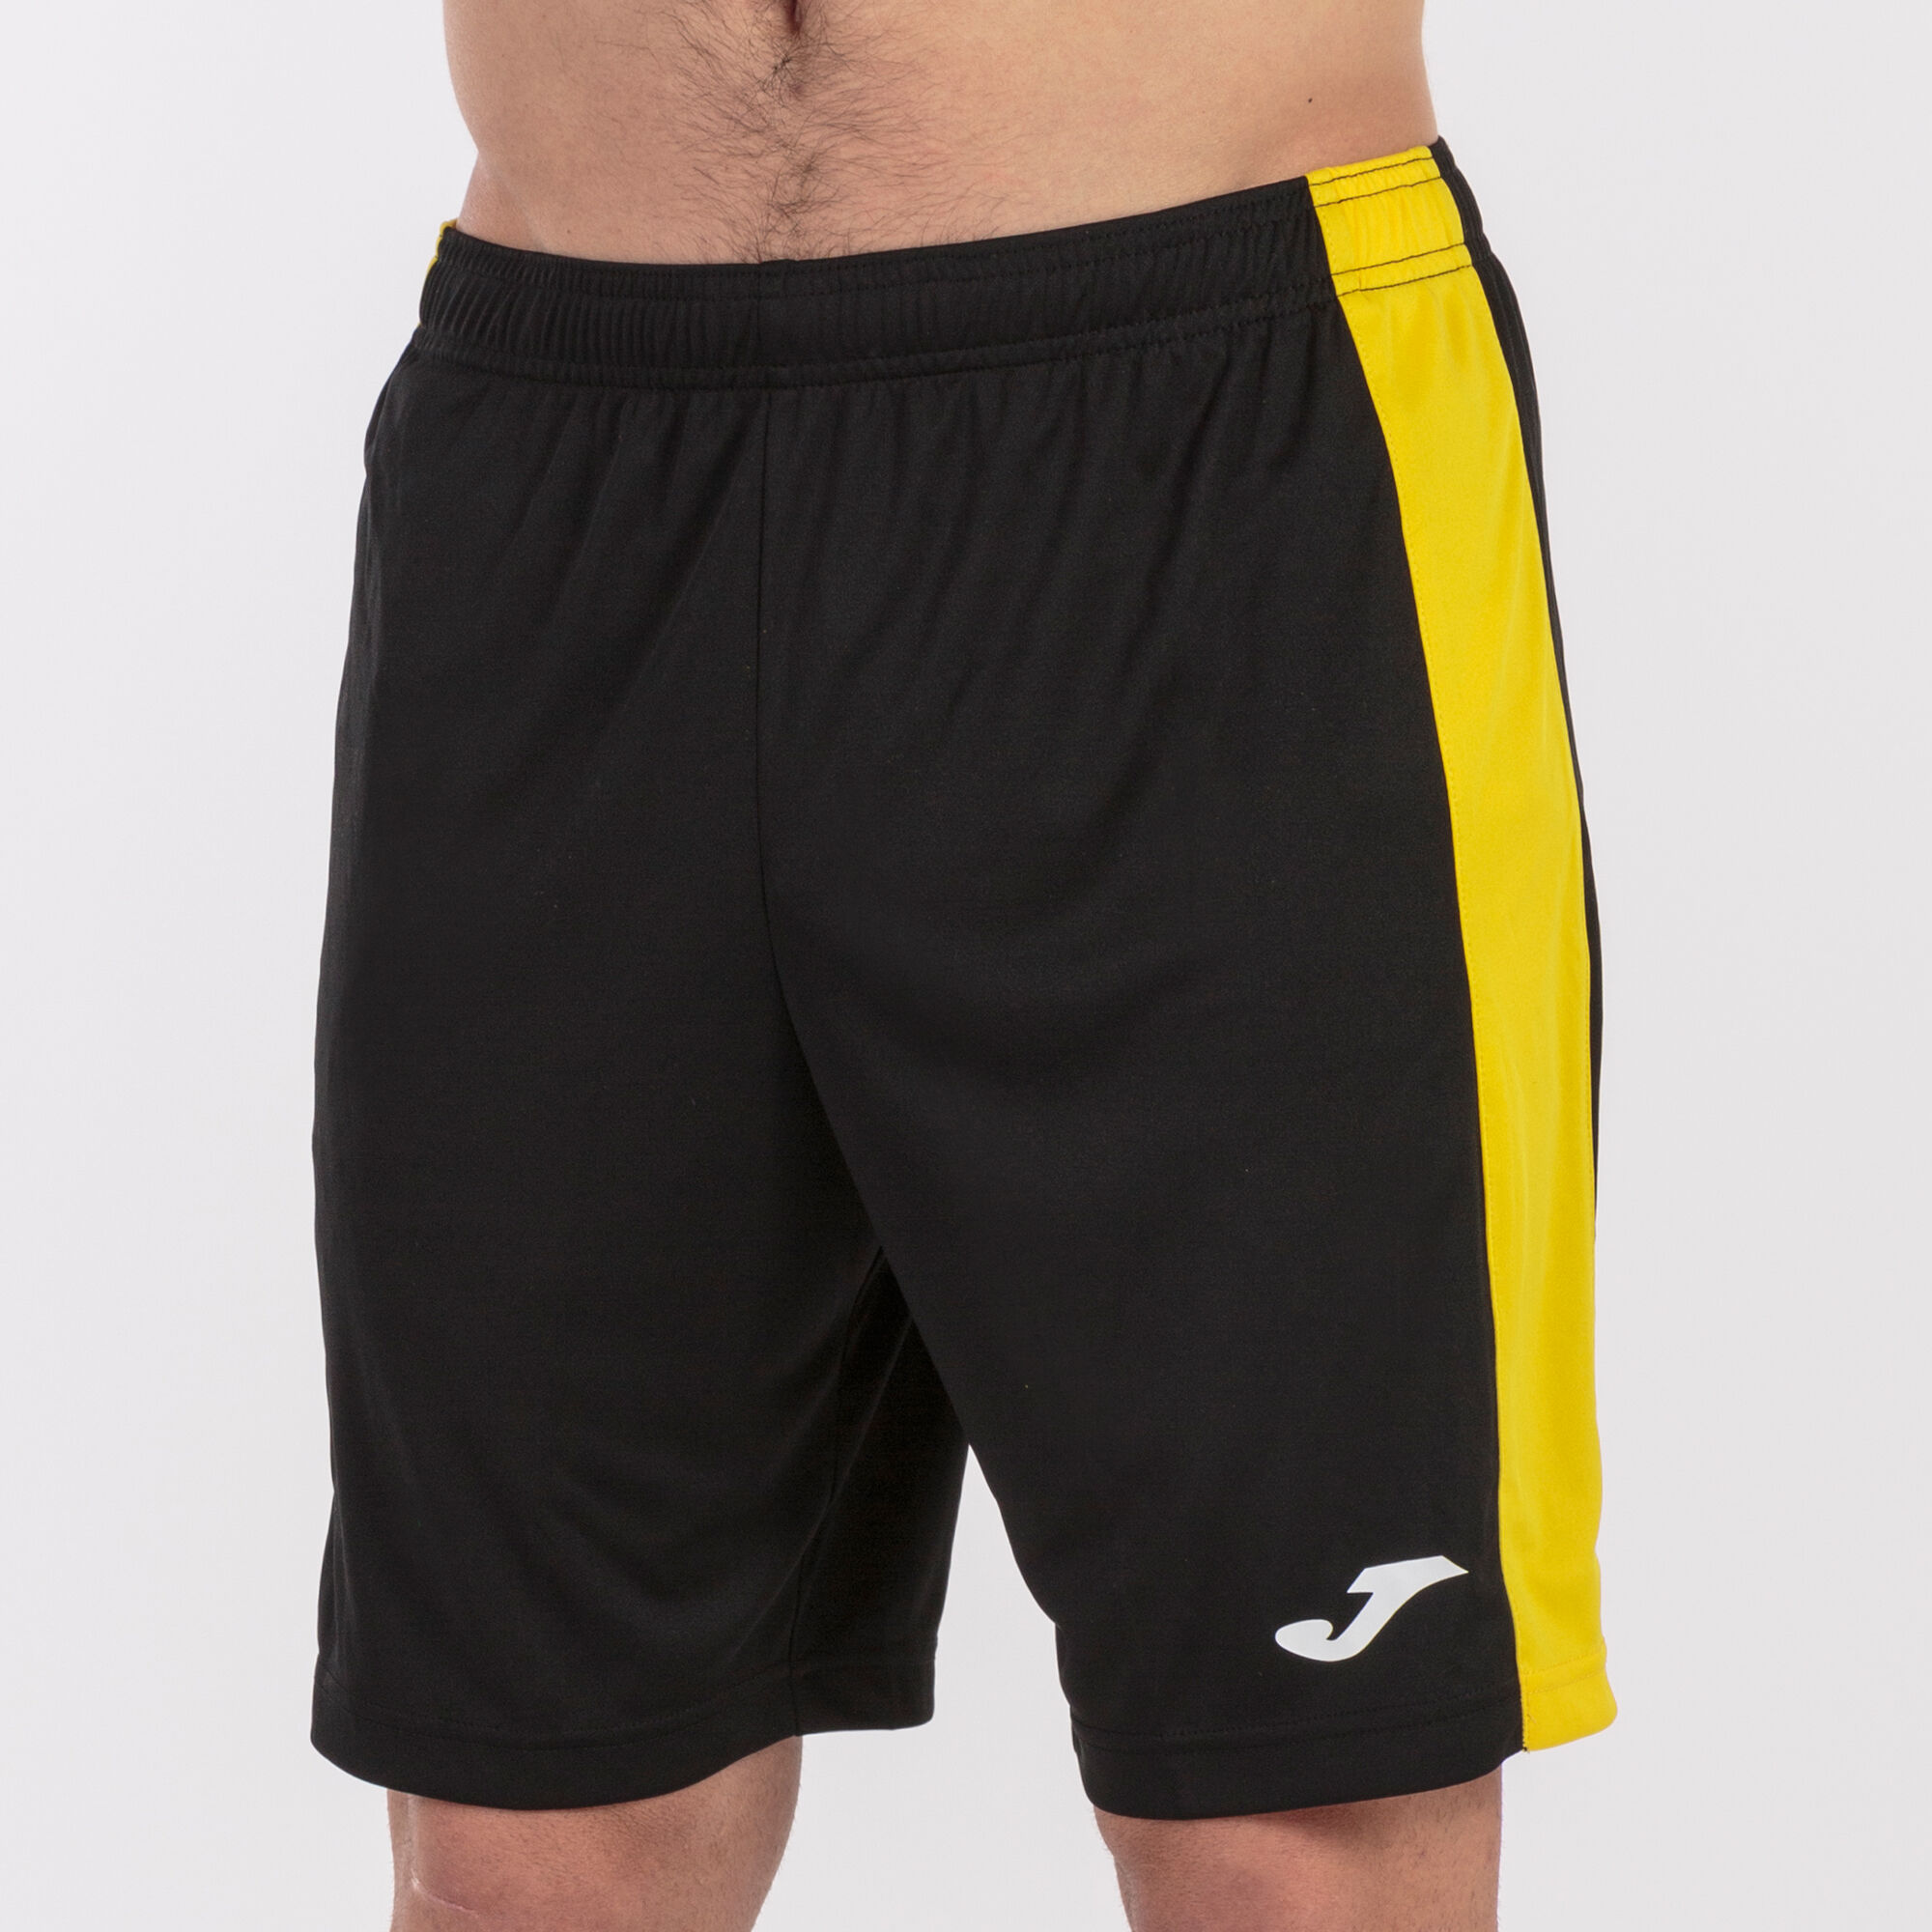 Shorts man Maxi black yellow